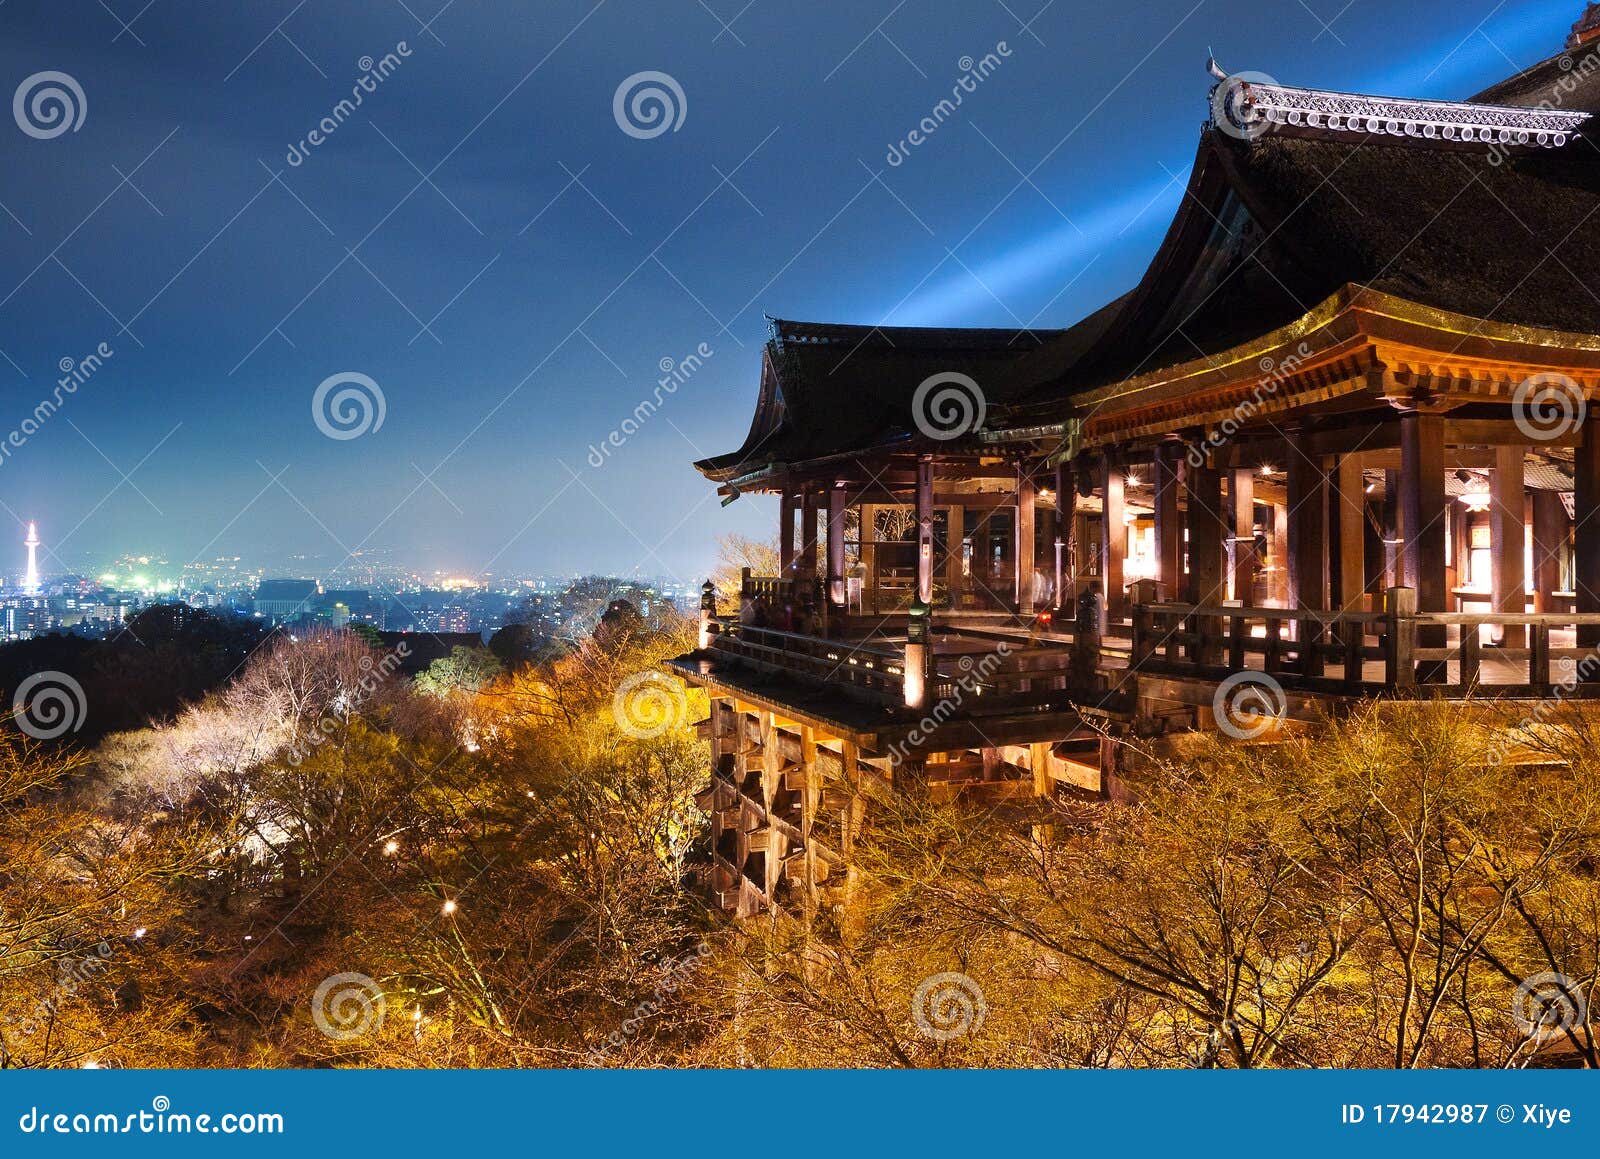 kiyomizu temple overlook kyoto city